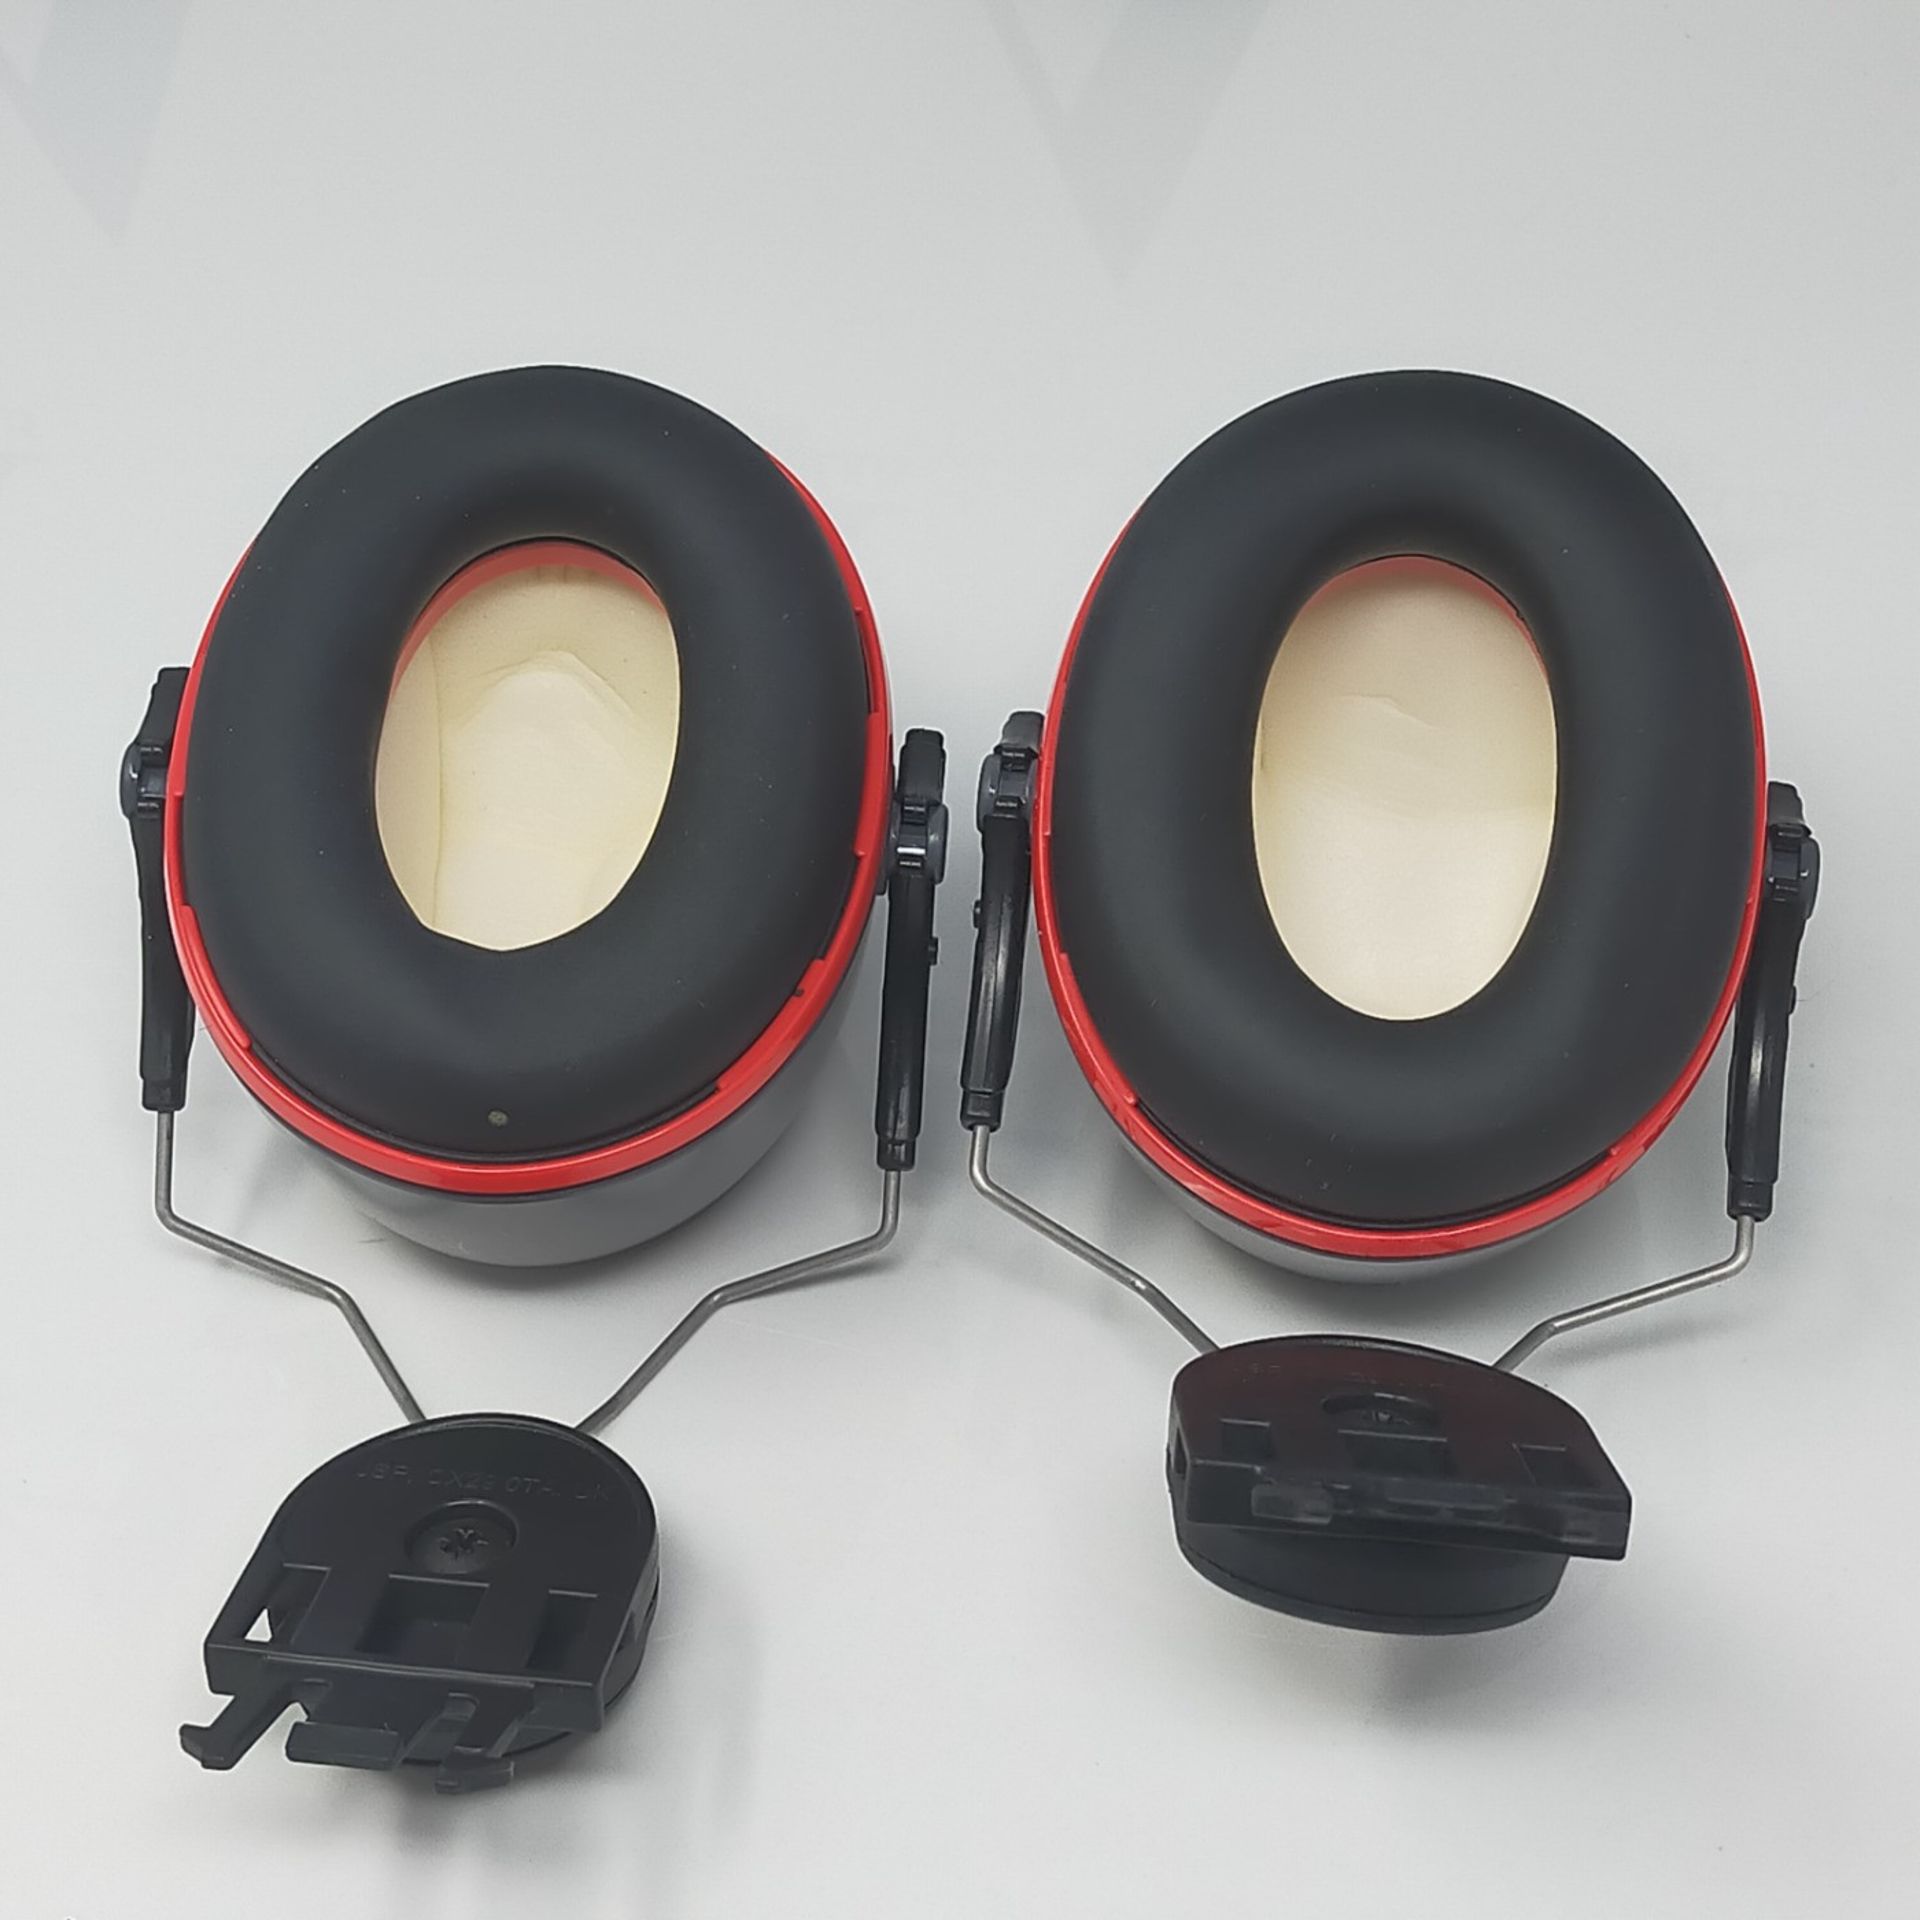 JSP Sonis 3 Helmet Mounted Ear Defenders - SNR 36 - (AEB040-0C1-A00), One size - Image 3 of 3